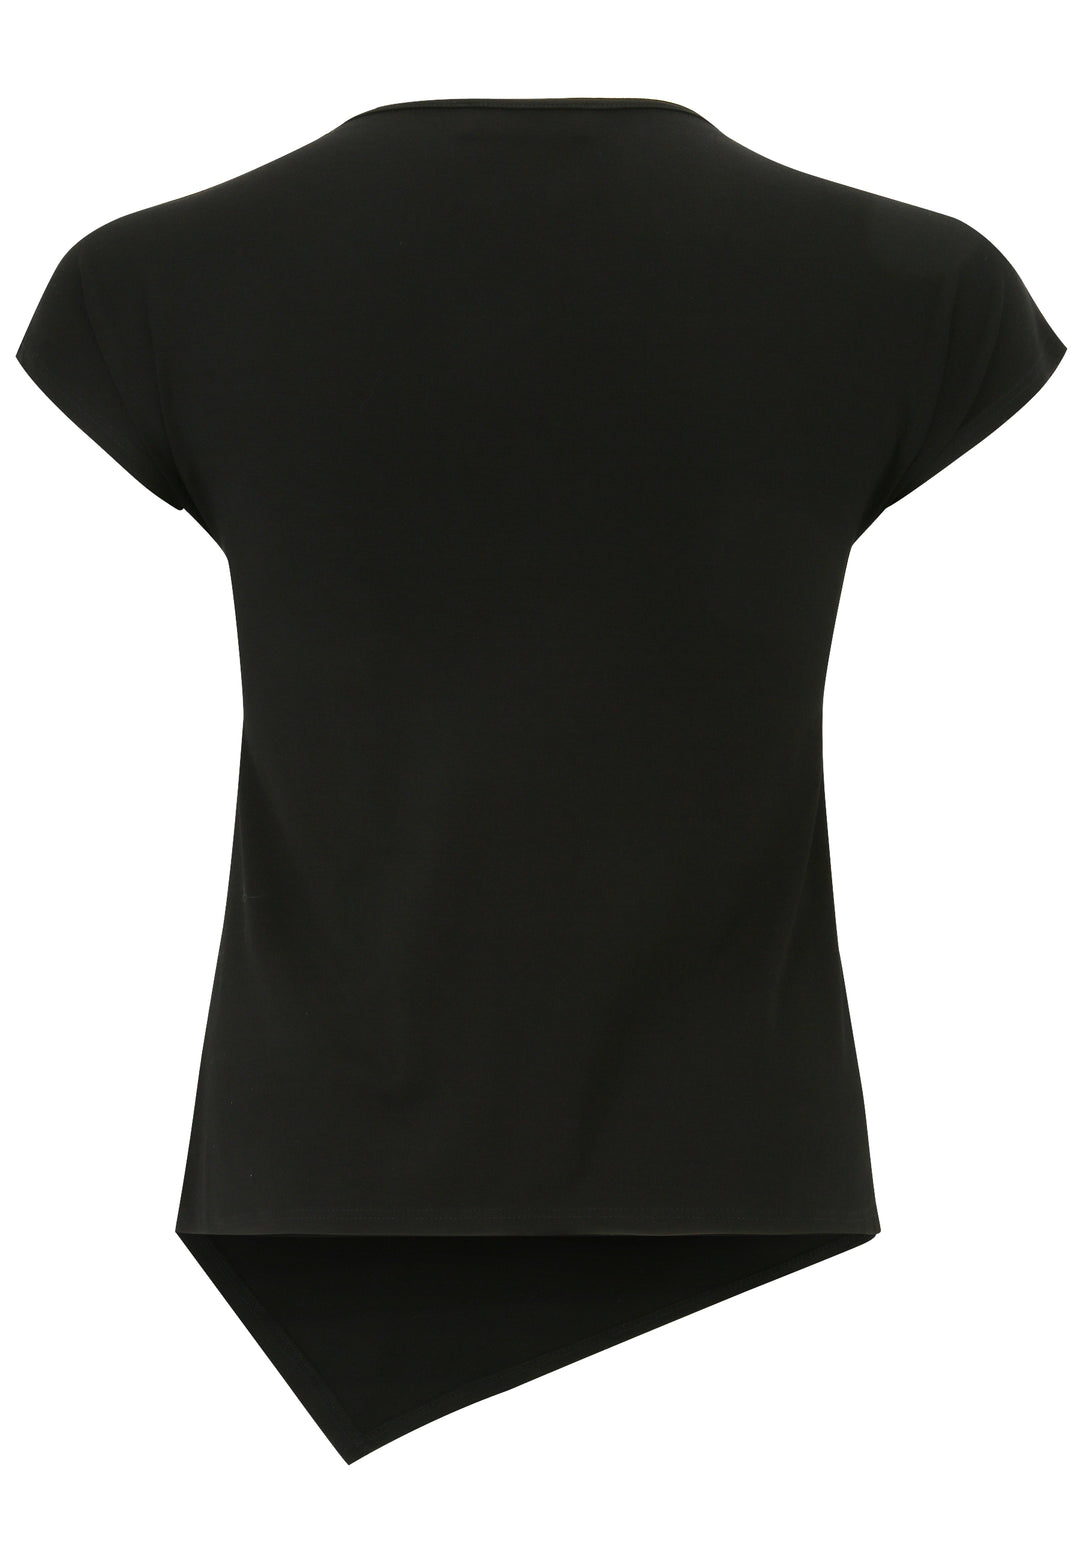 zwart t-shirt met subtiele tekening - doris streich - 504270 - grote maten - dameskleding - kledingwinkel - herent - leuven